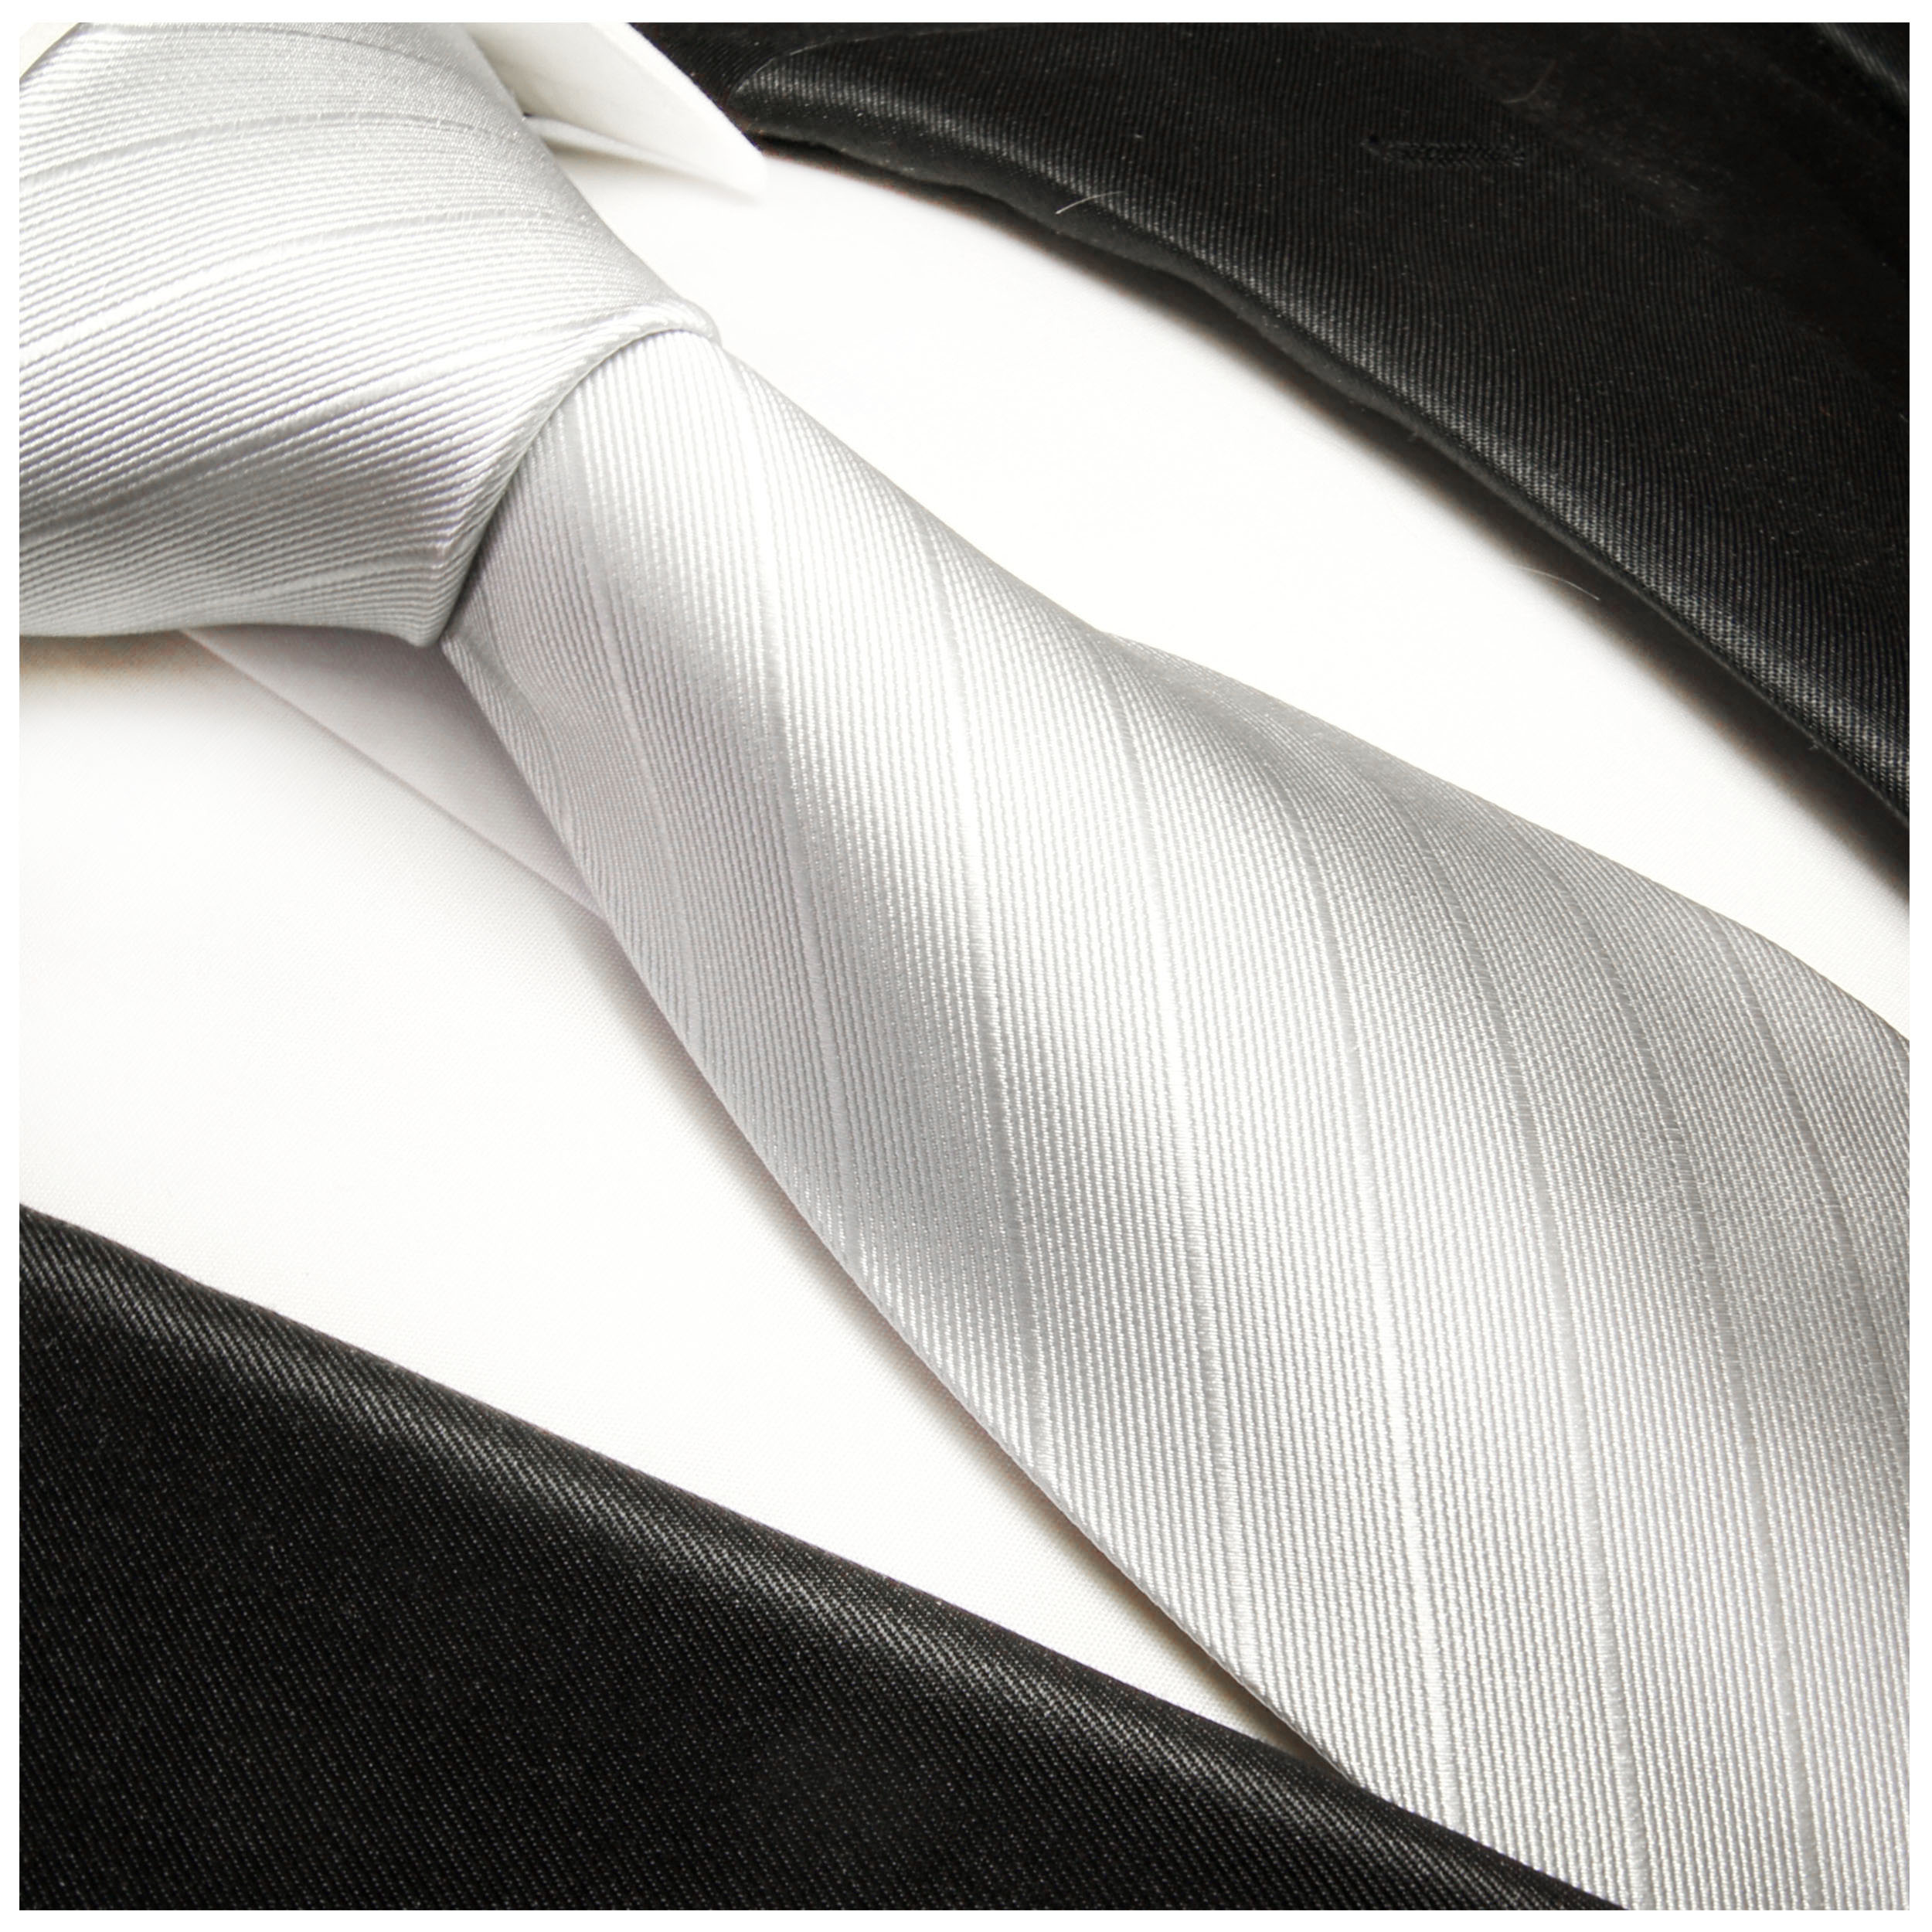 Krawatte silber uni gestreift | Malone Shop KLICKEN -50% | HIER - Paul